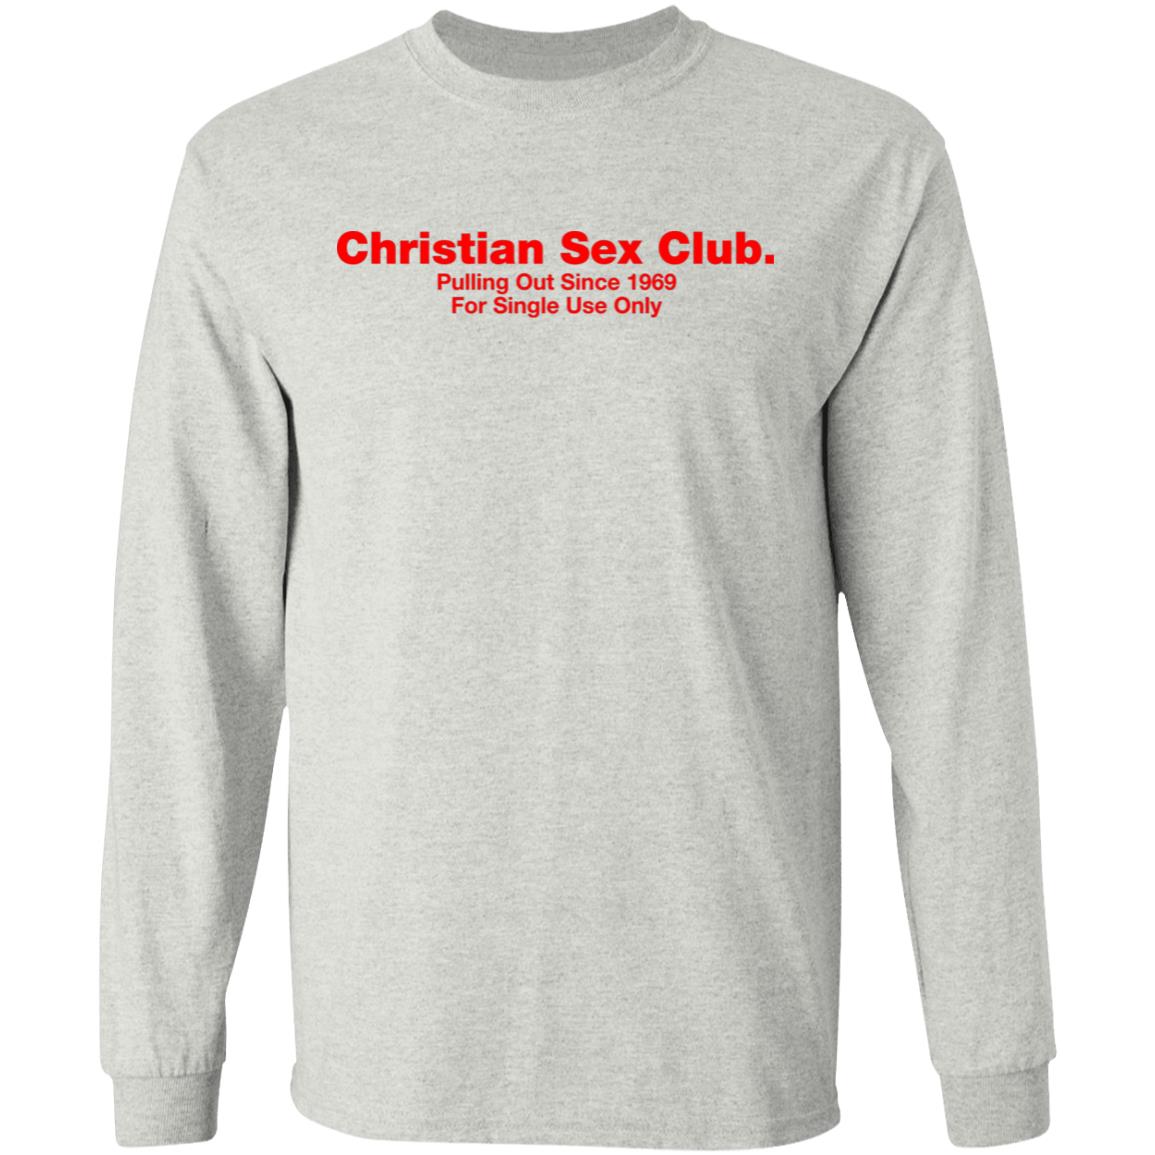 Christian sexclub